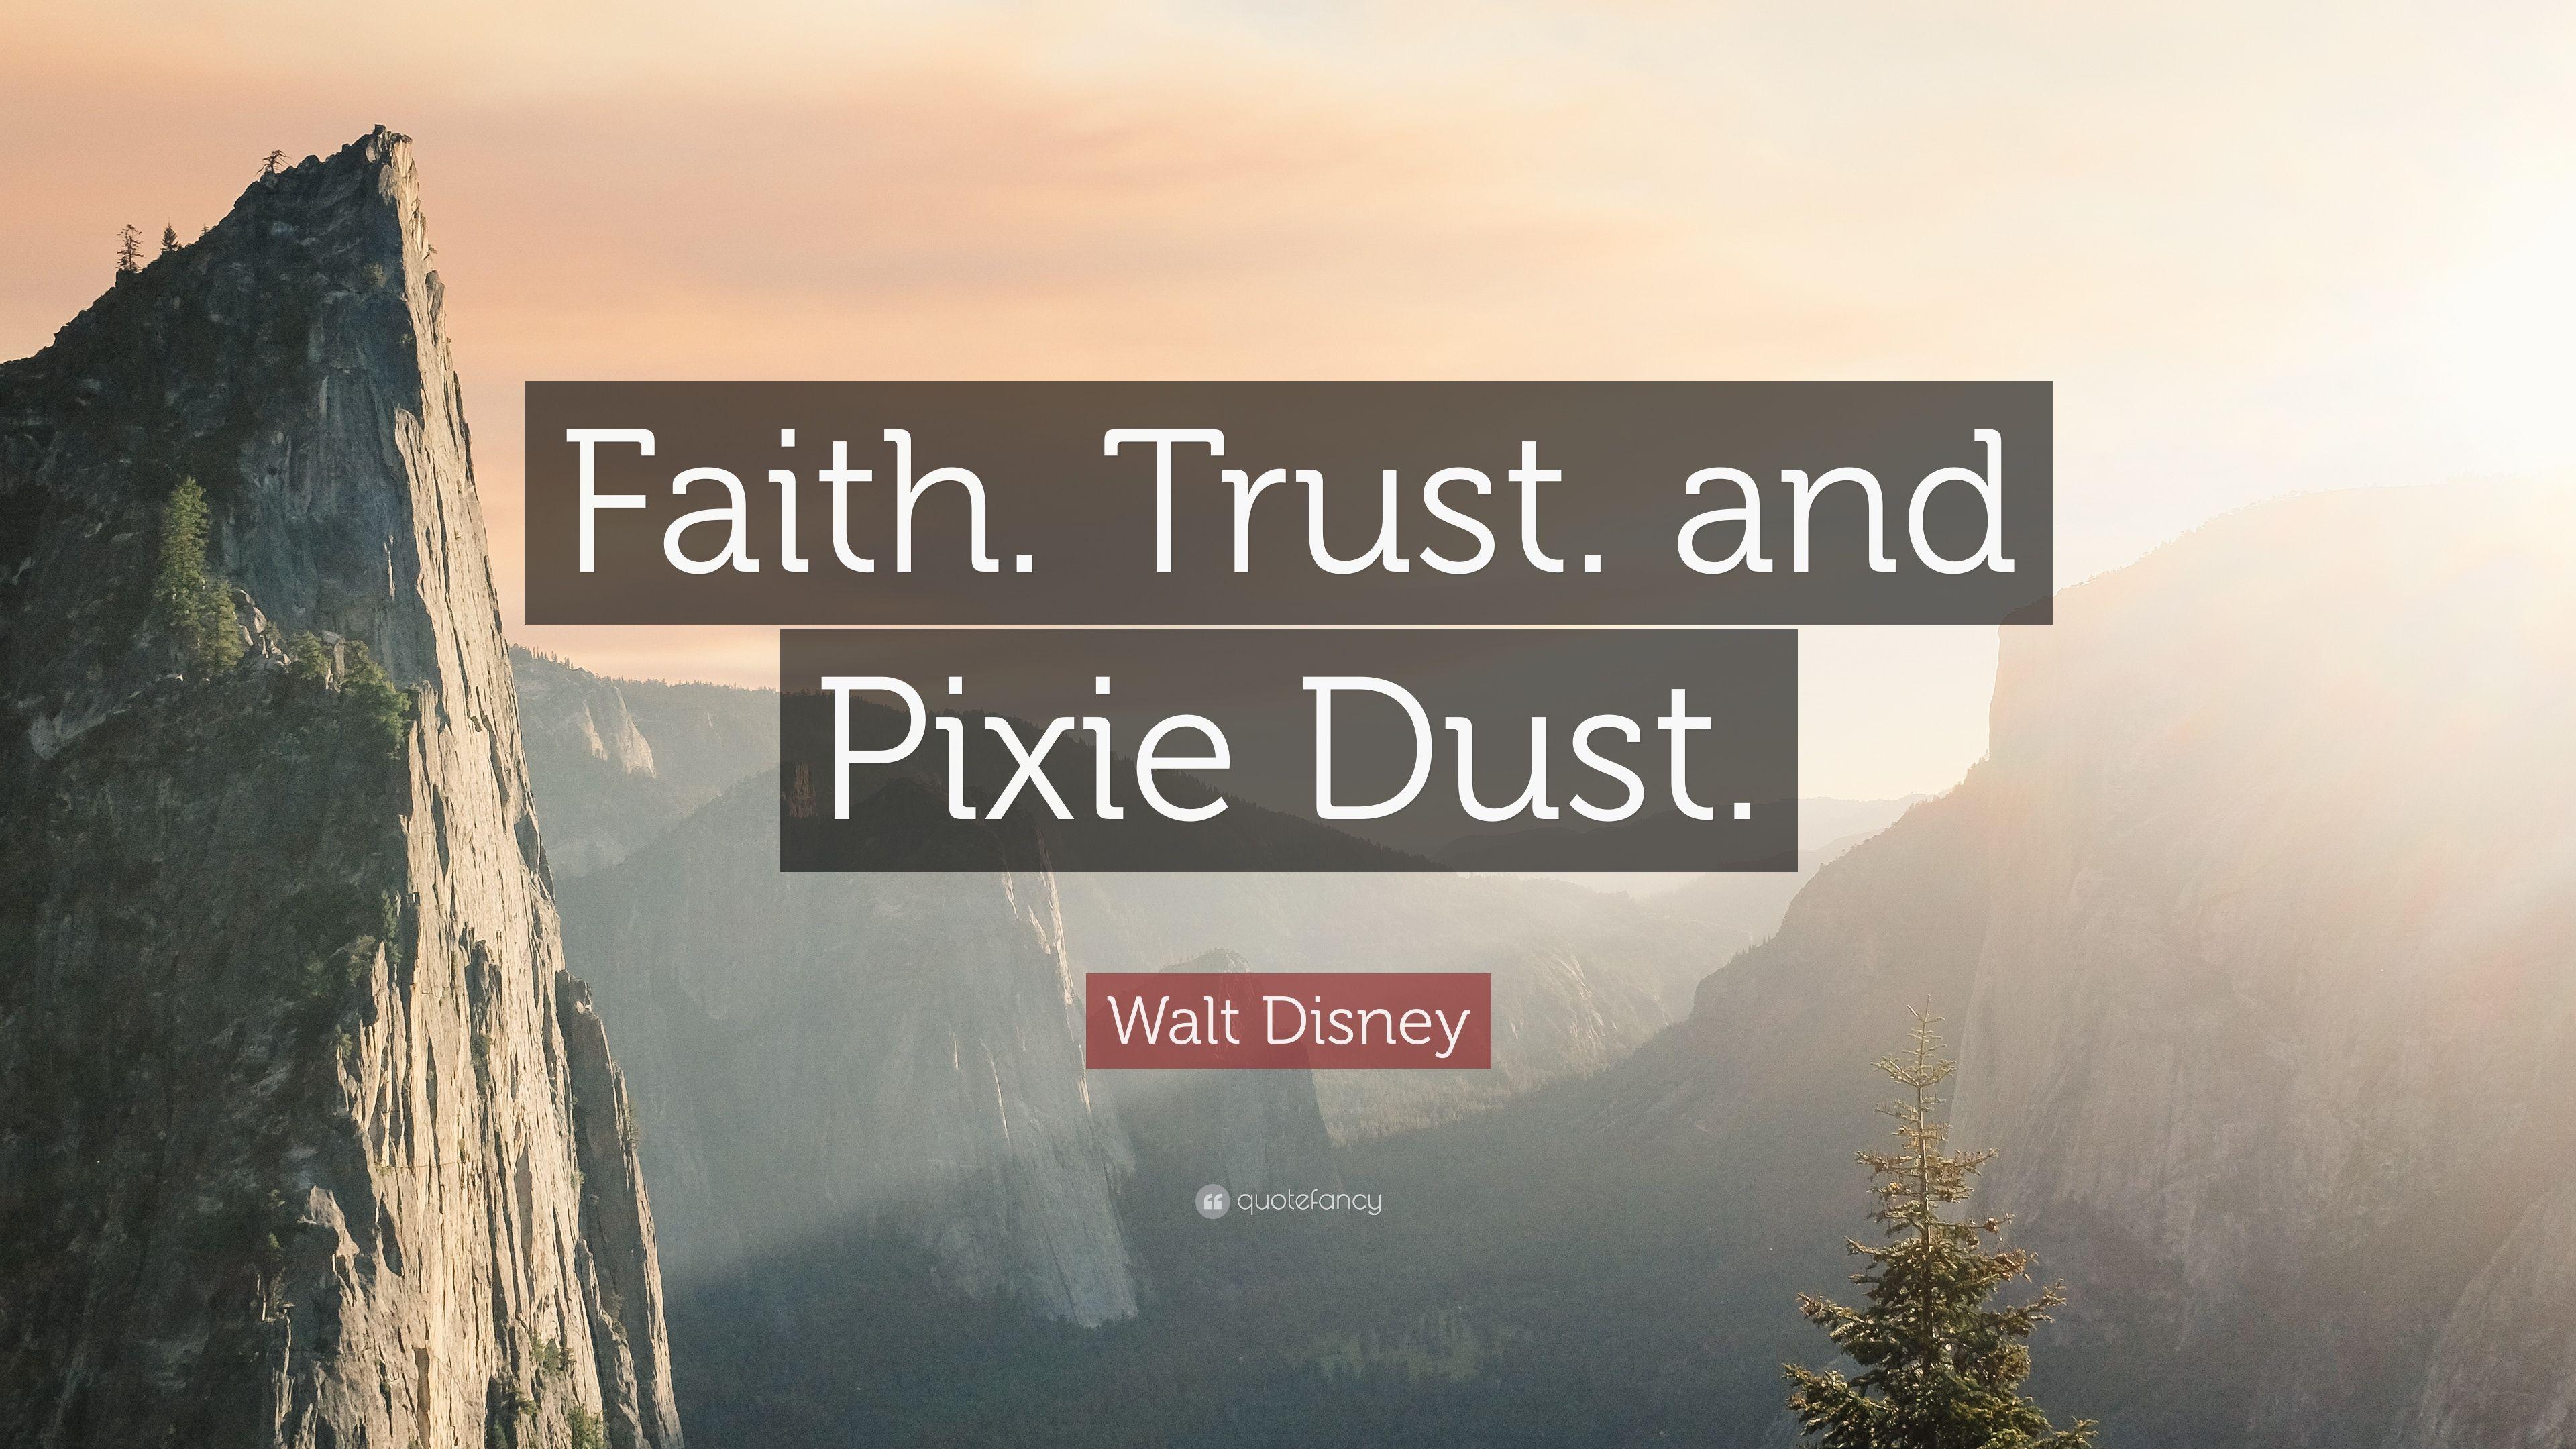 Walt Disney Quote: “Faith. Trust. and Pixie Dust.” 10 wallpaper